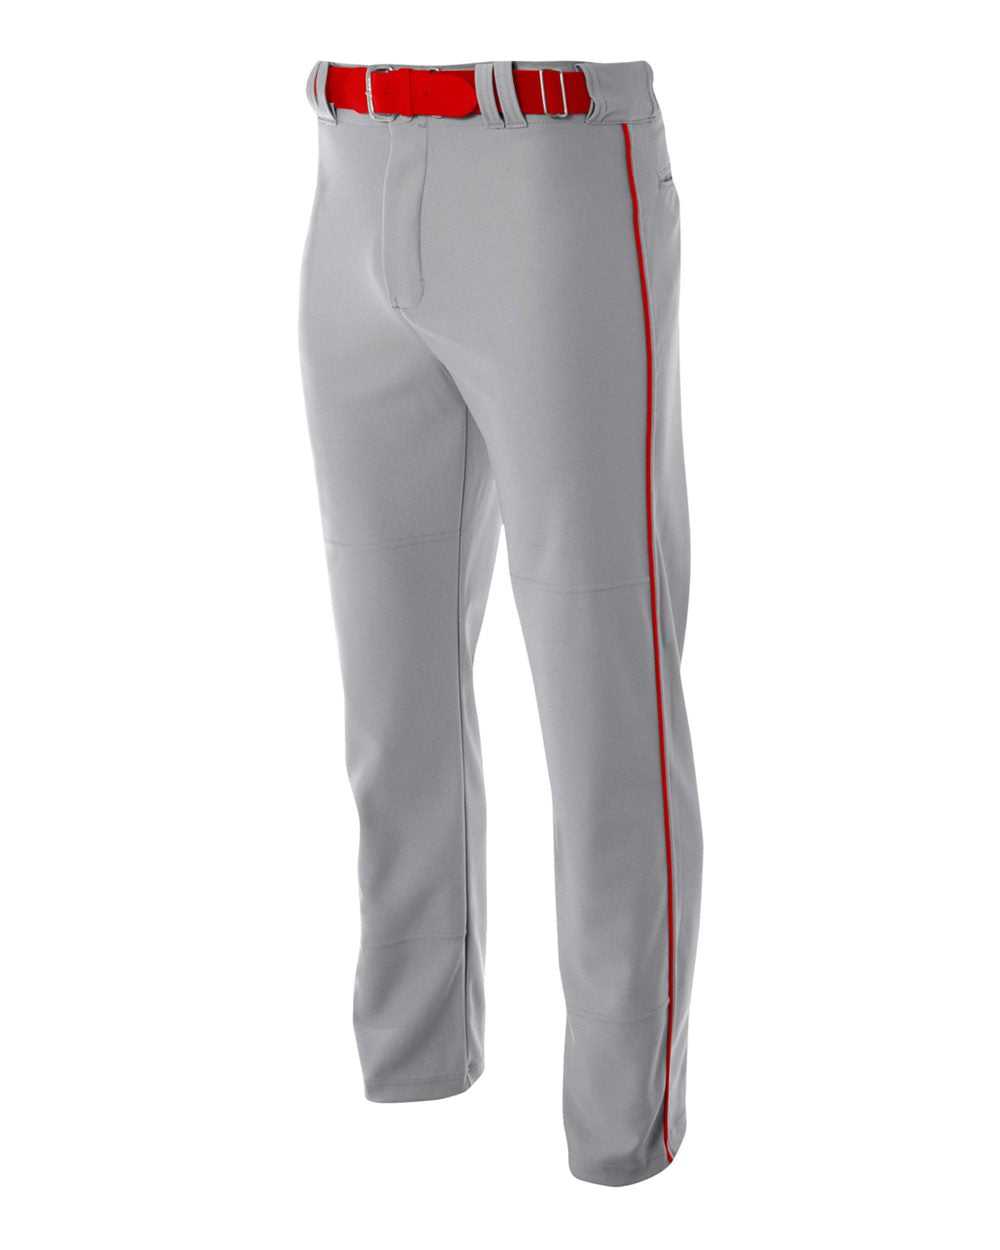 A4 N6162 Pro Style Open Bottom Baggy Cut Baseball Pant - Gray Scarlet - HIT a Double